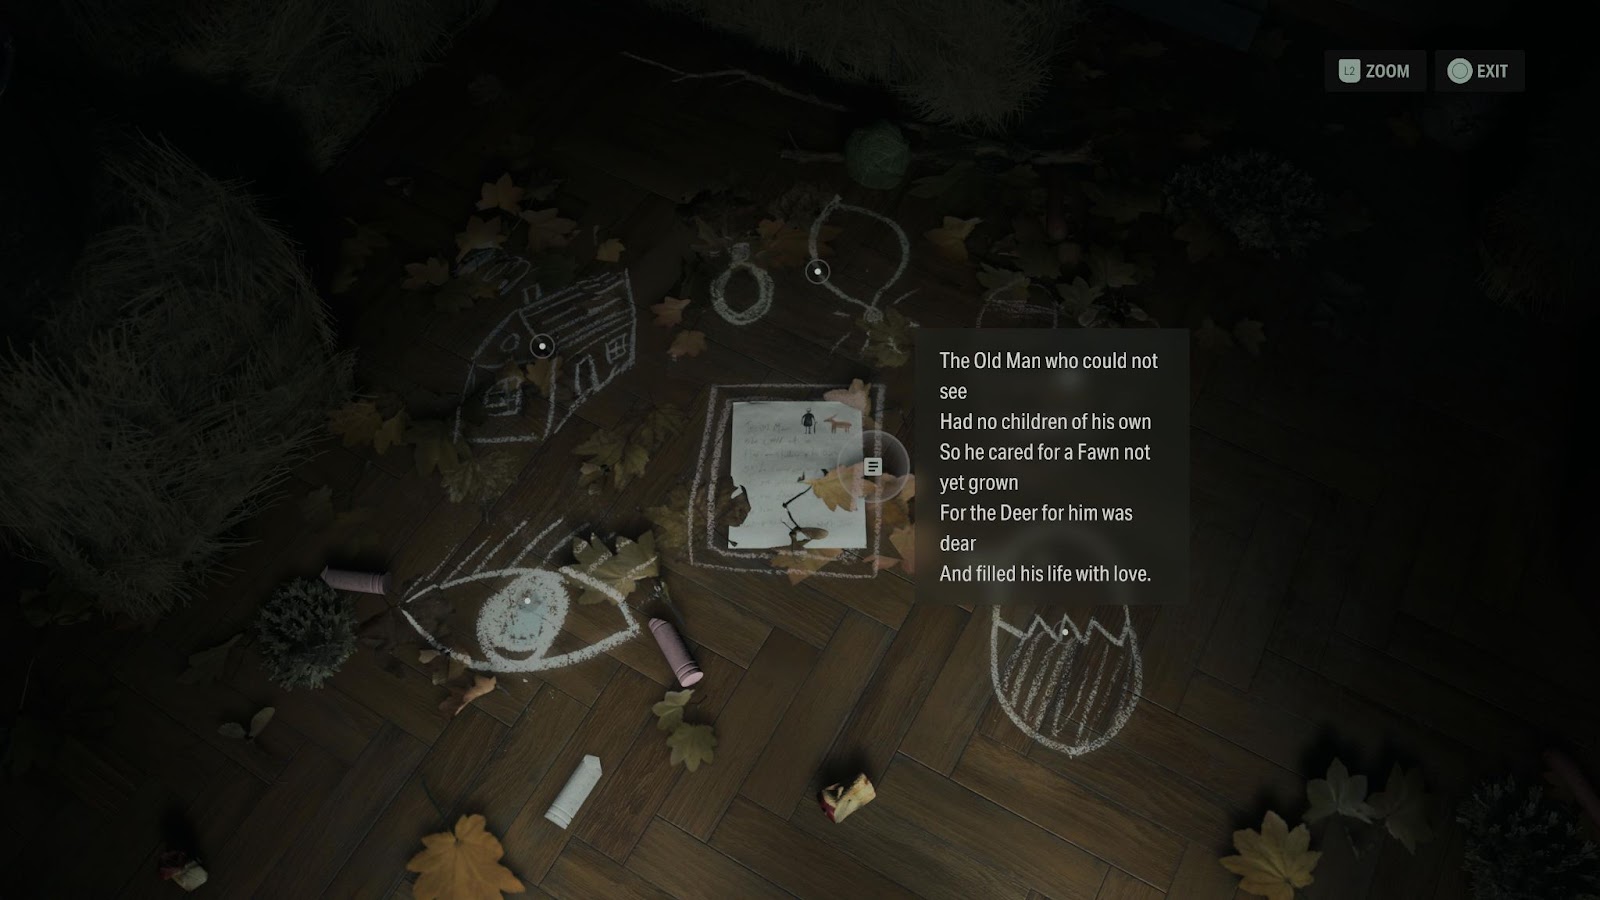 An in game screenshot of the locked trailer nursey rhyme in Watery in Alan Wake 2.